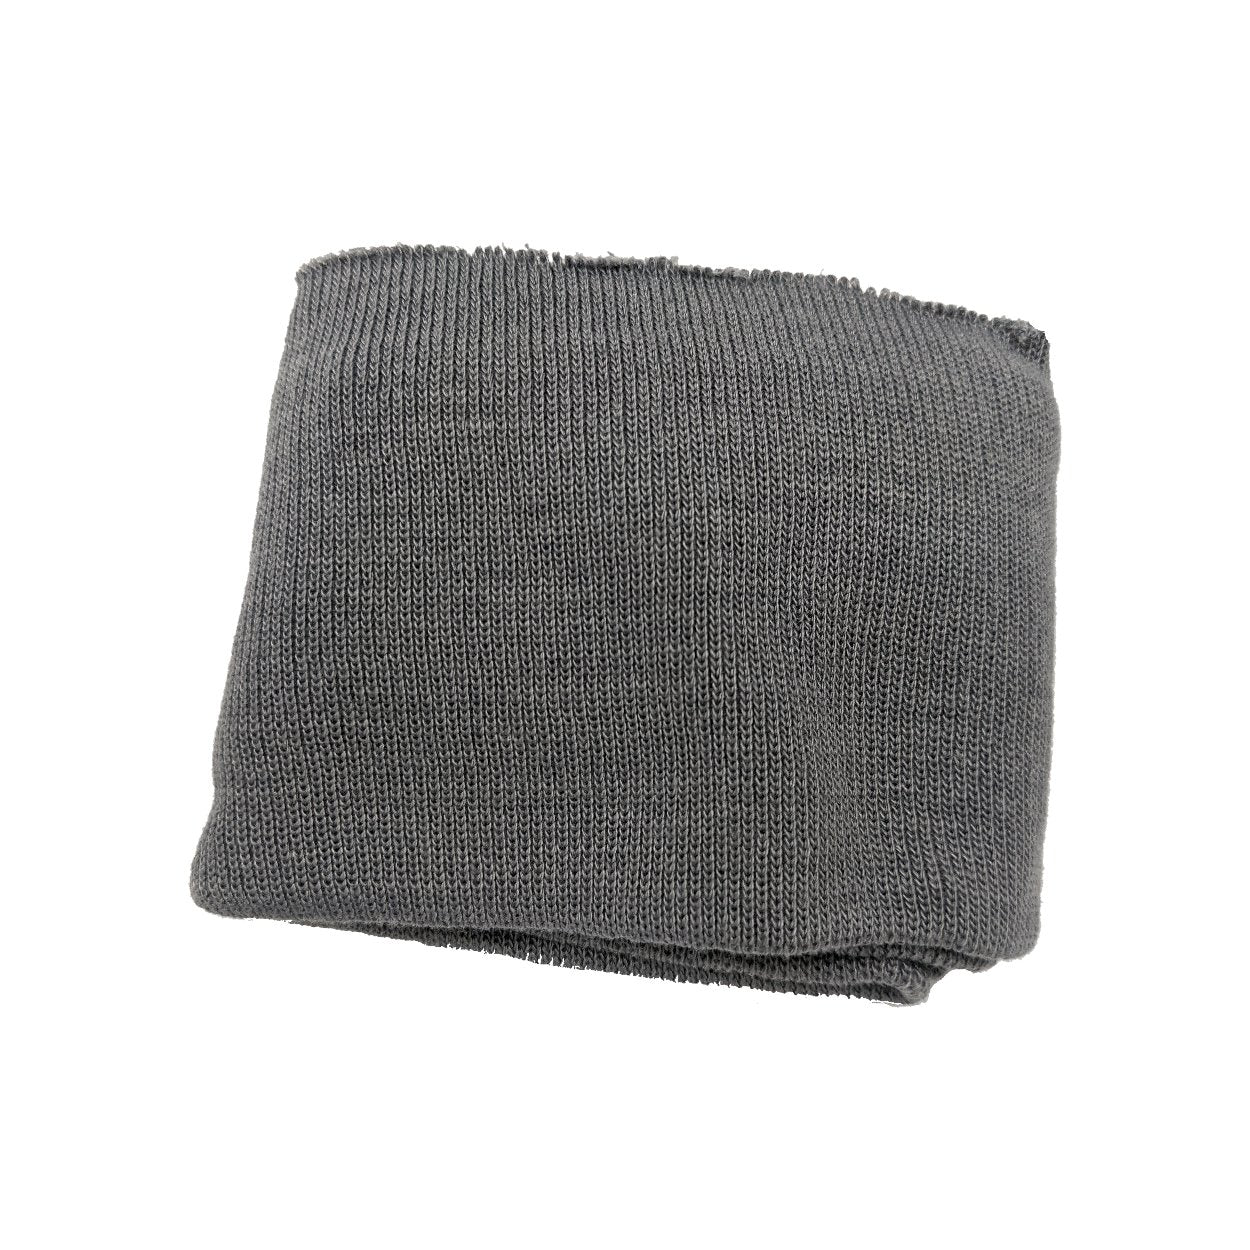 Ribbing for sweatshirt / hoodie hems by Prym from Jaycotts Sewing Supplies